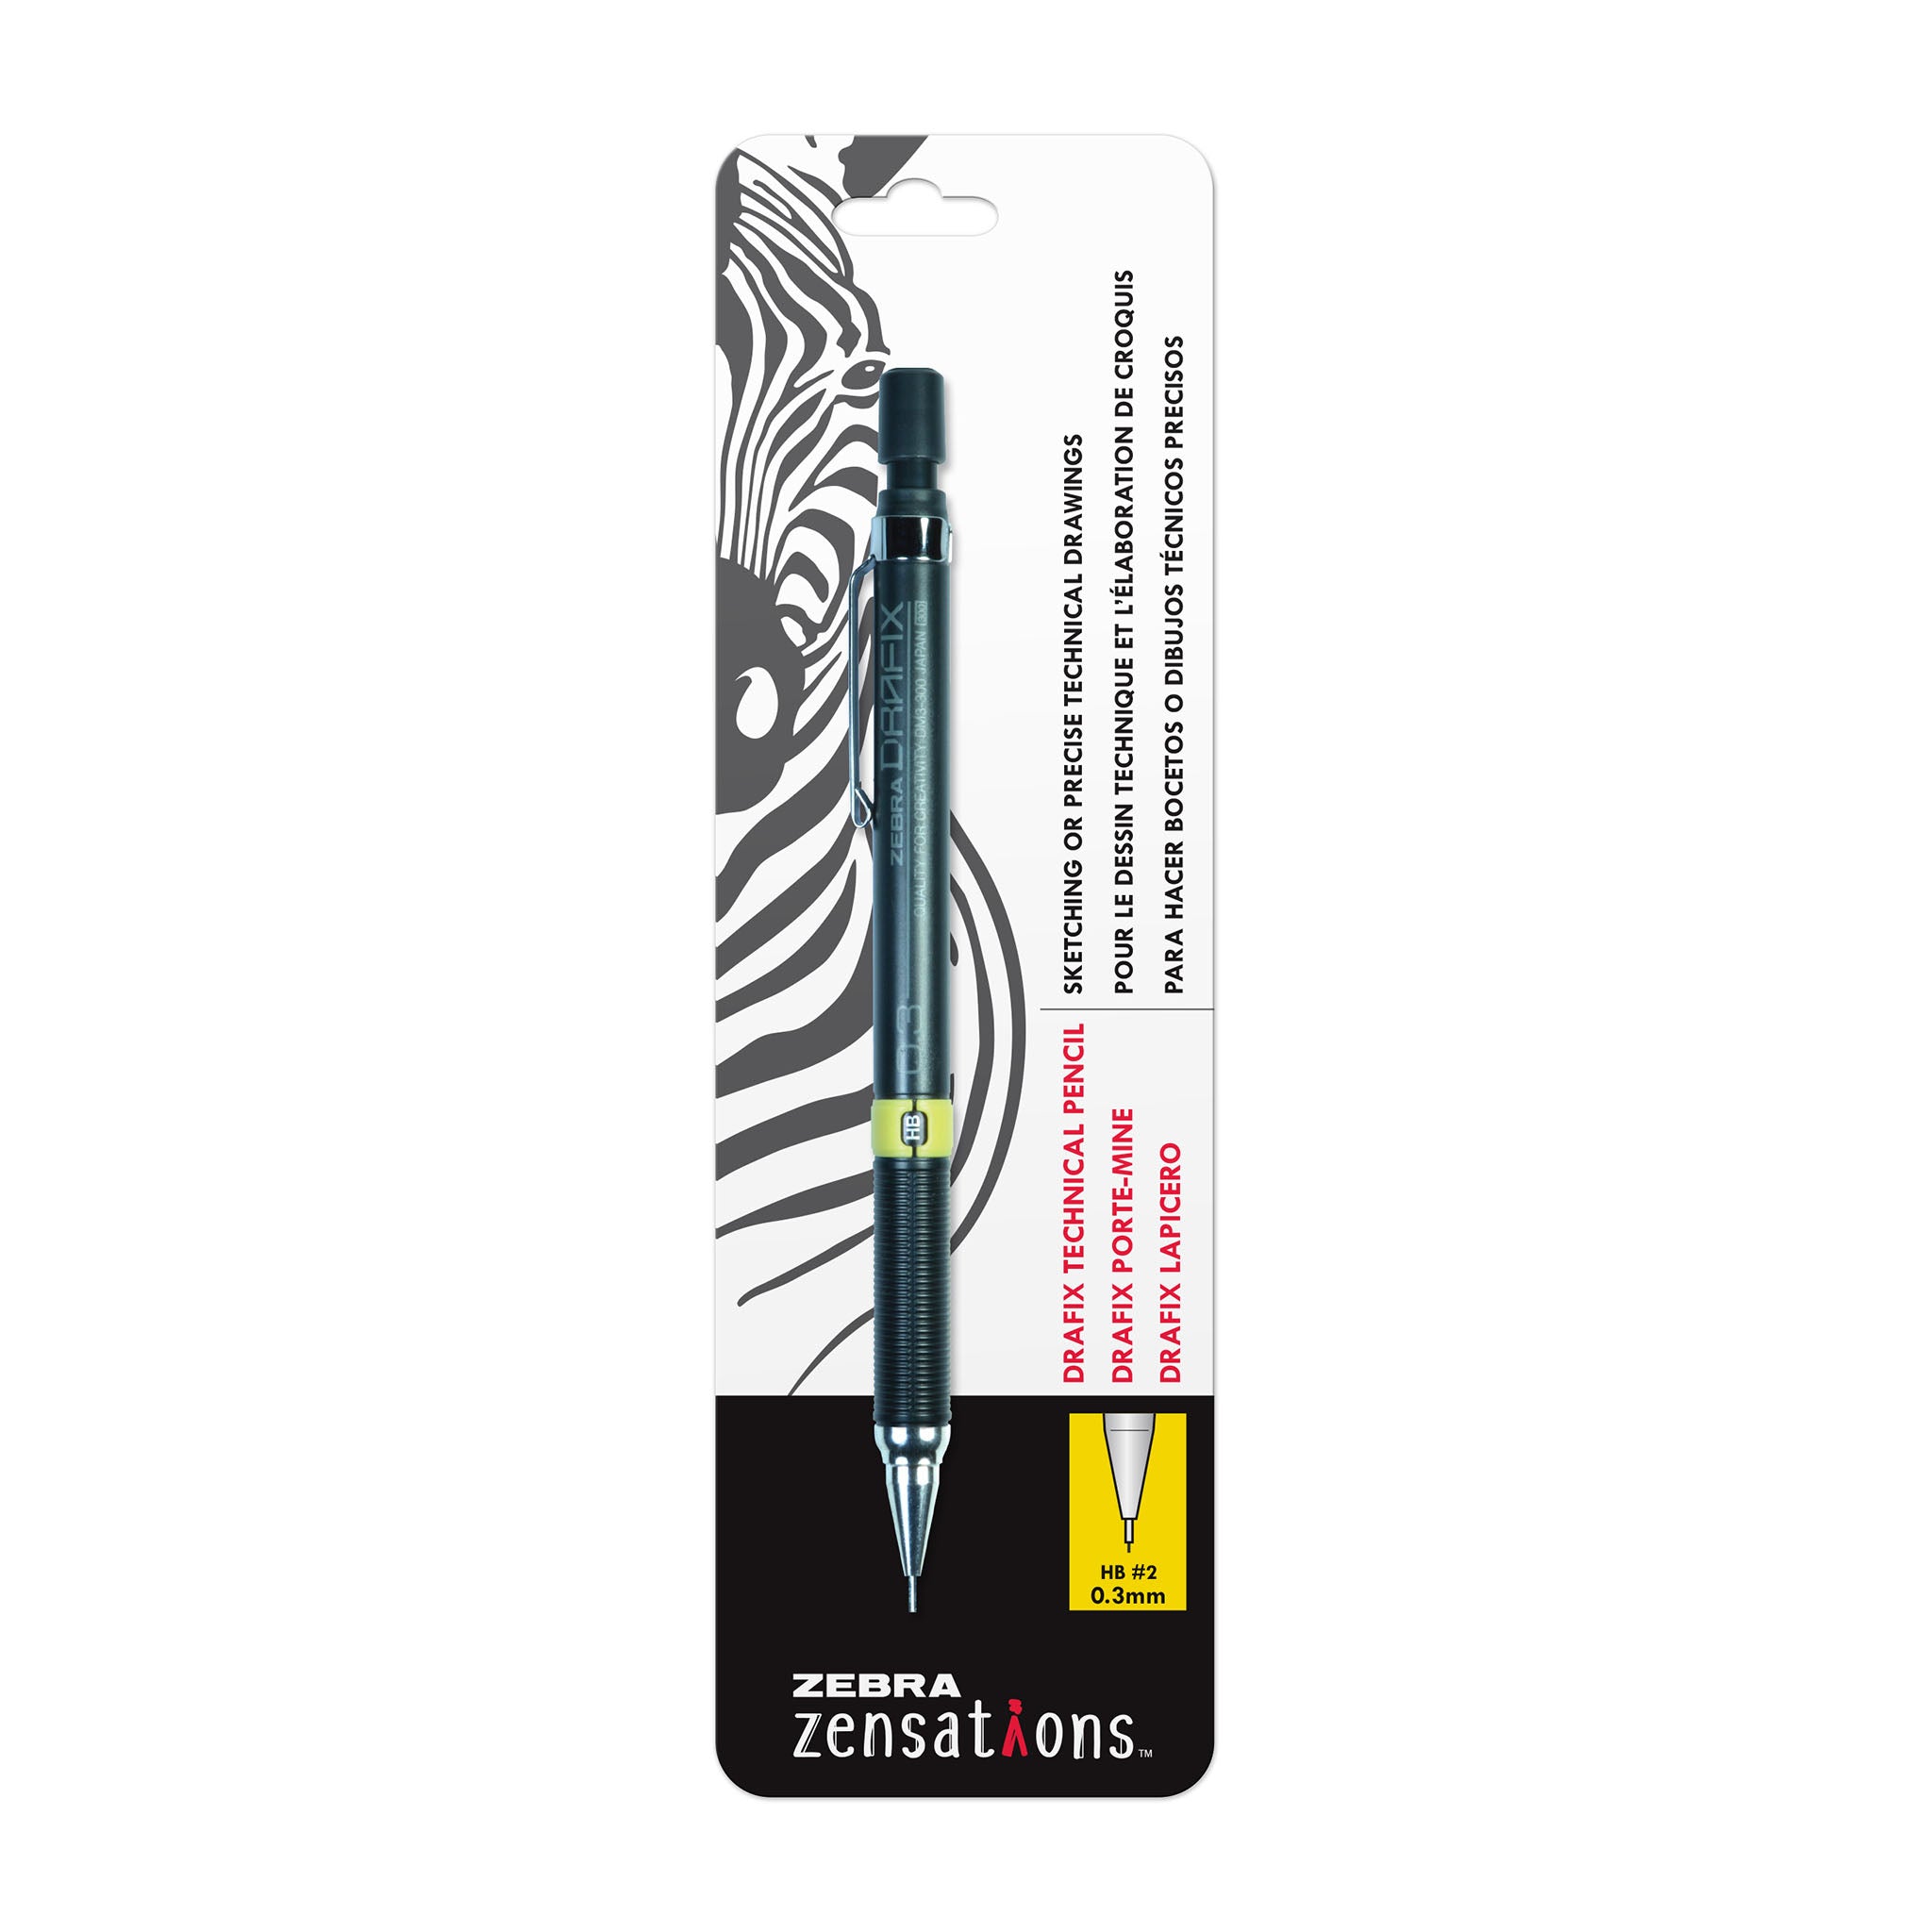 ZEBRA Brand DRAFIX Technical Pencil